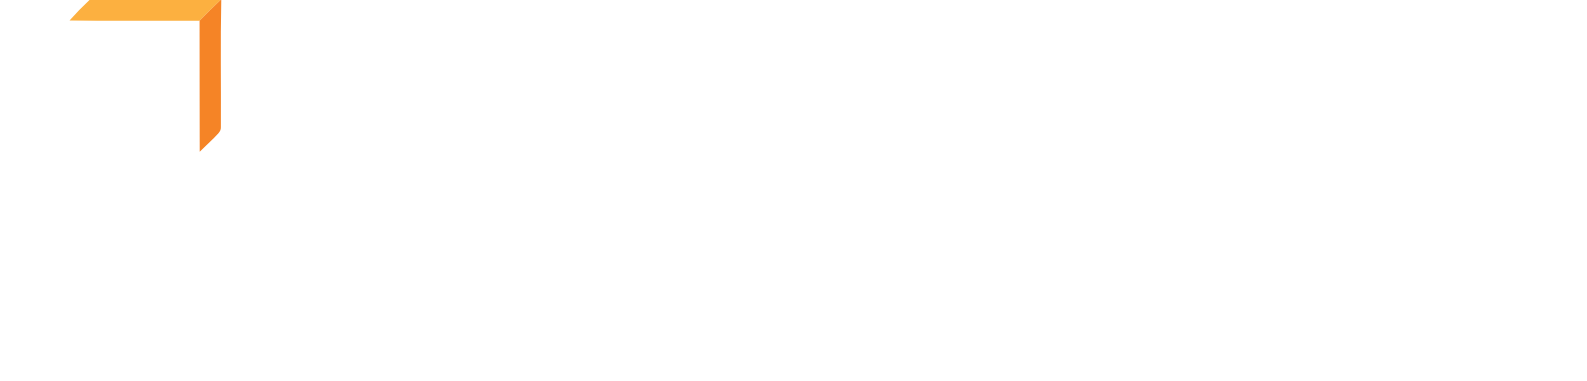 First Trust logo large for dark backgrounds (transparent PNG)